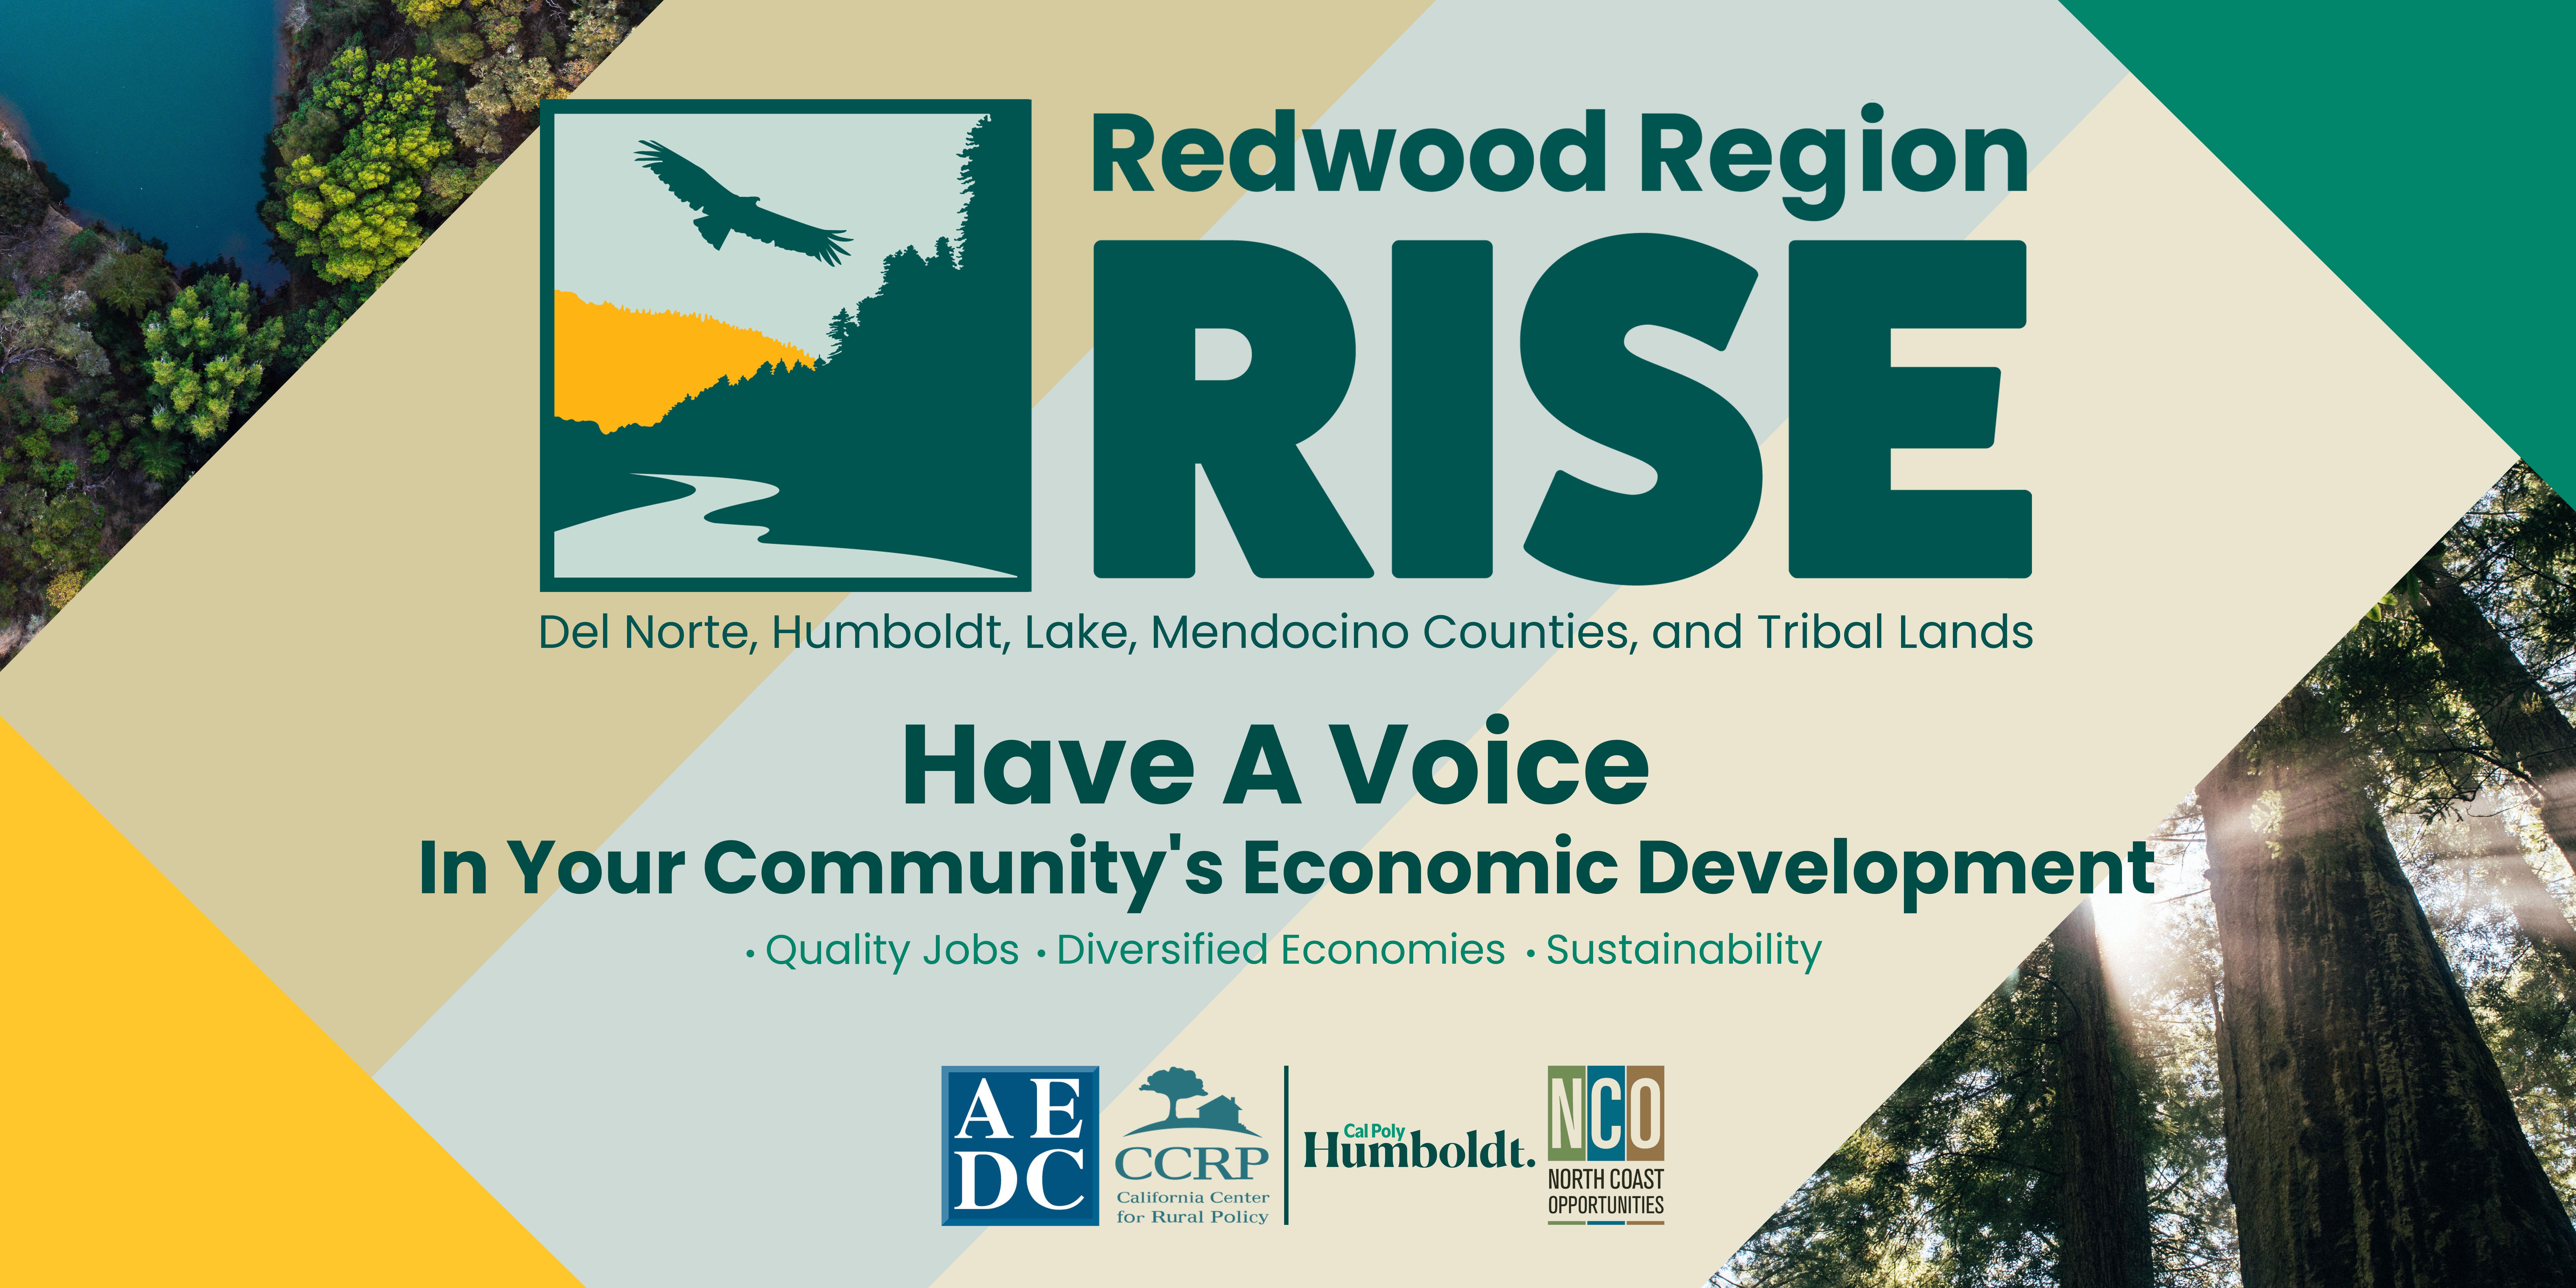 Redwood Region RISE - Economic Development - Del Norte, Humboldt, Lake, Mendocino and Tribal Lands